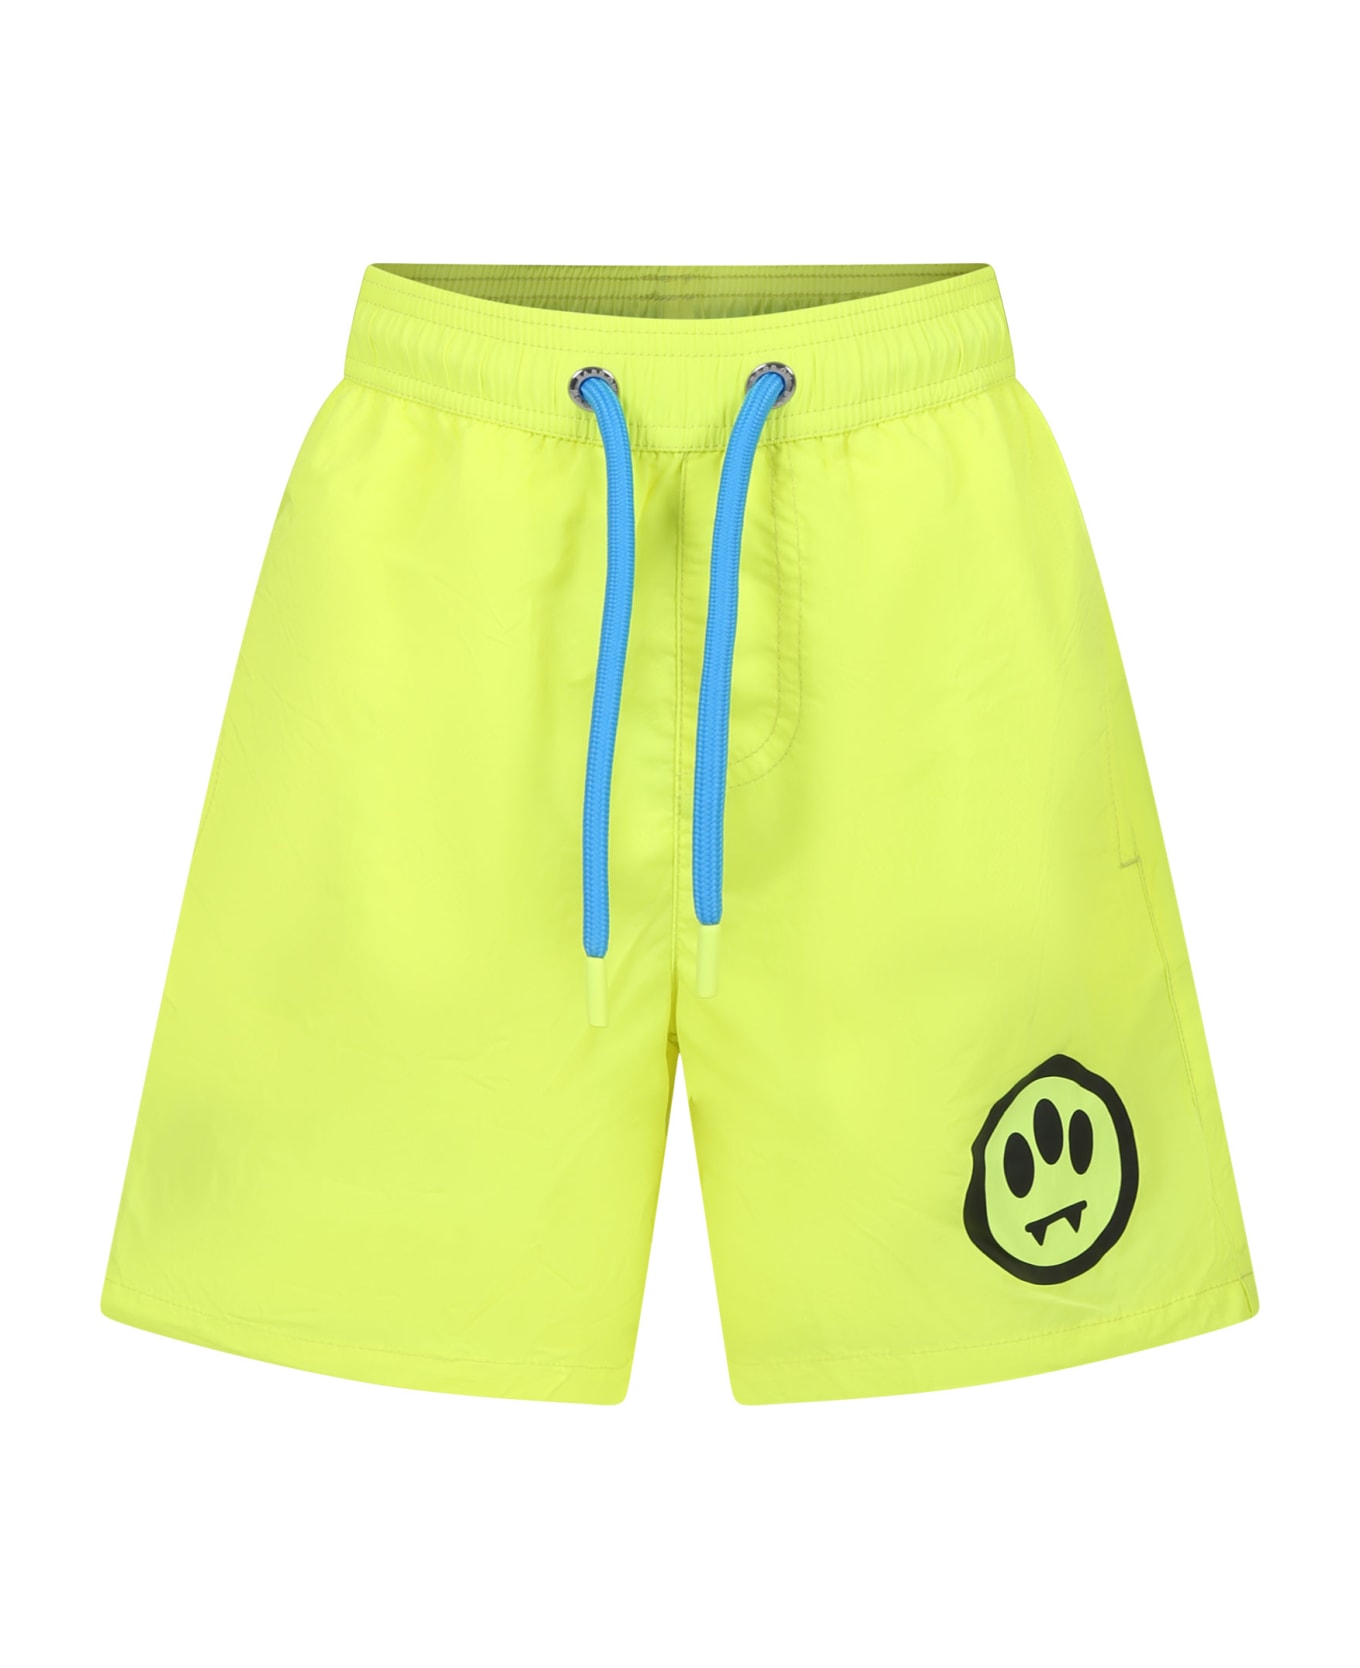 Barrow Yellow Swim Shorts For Boy With Smiley - Yellow